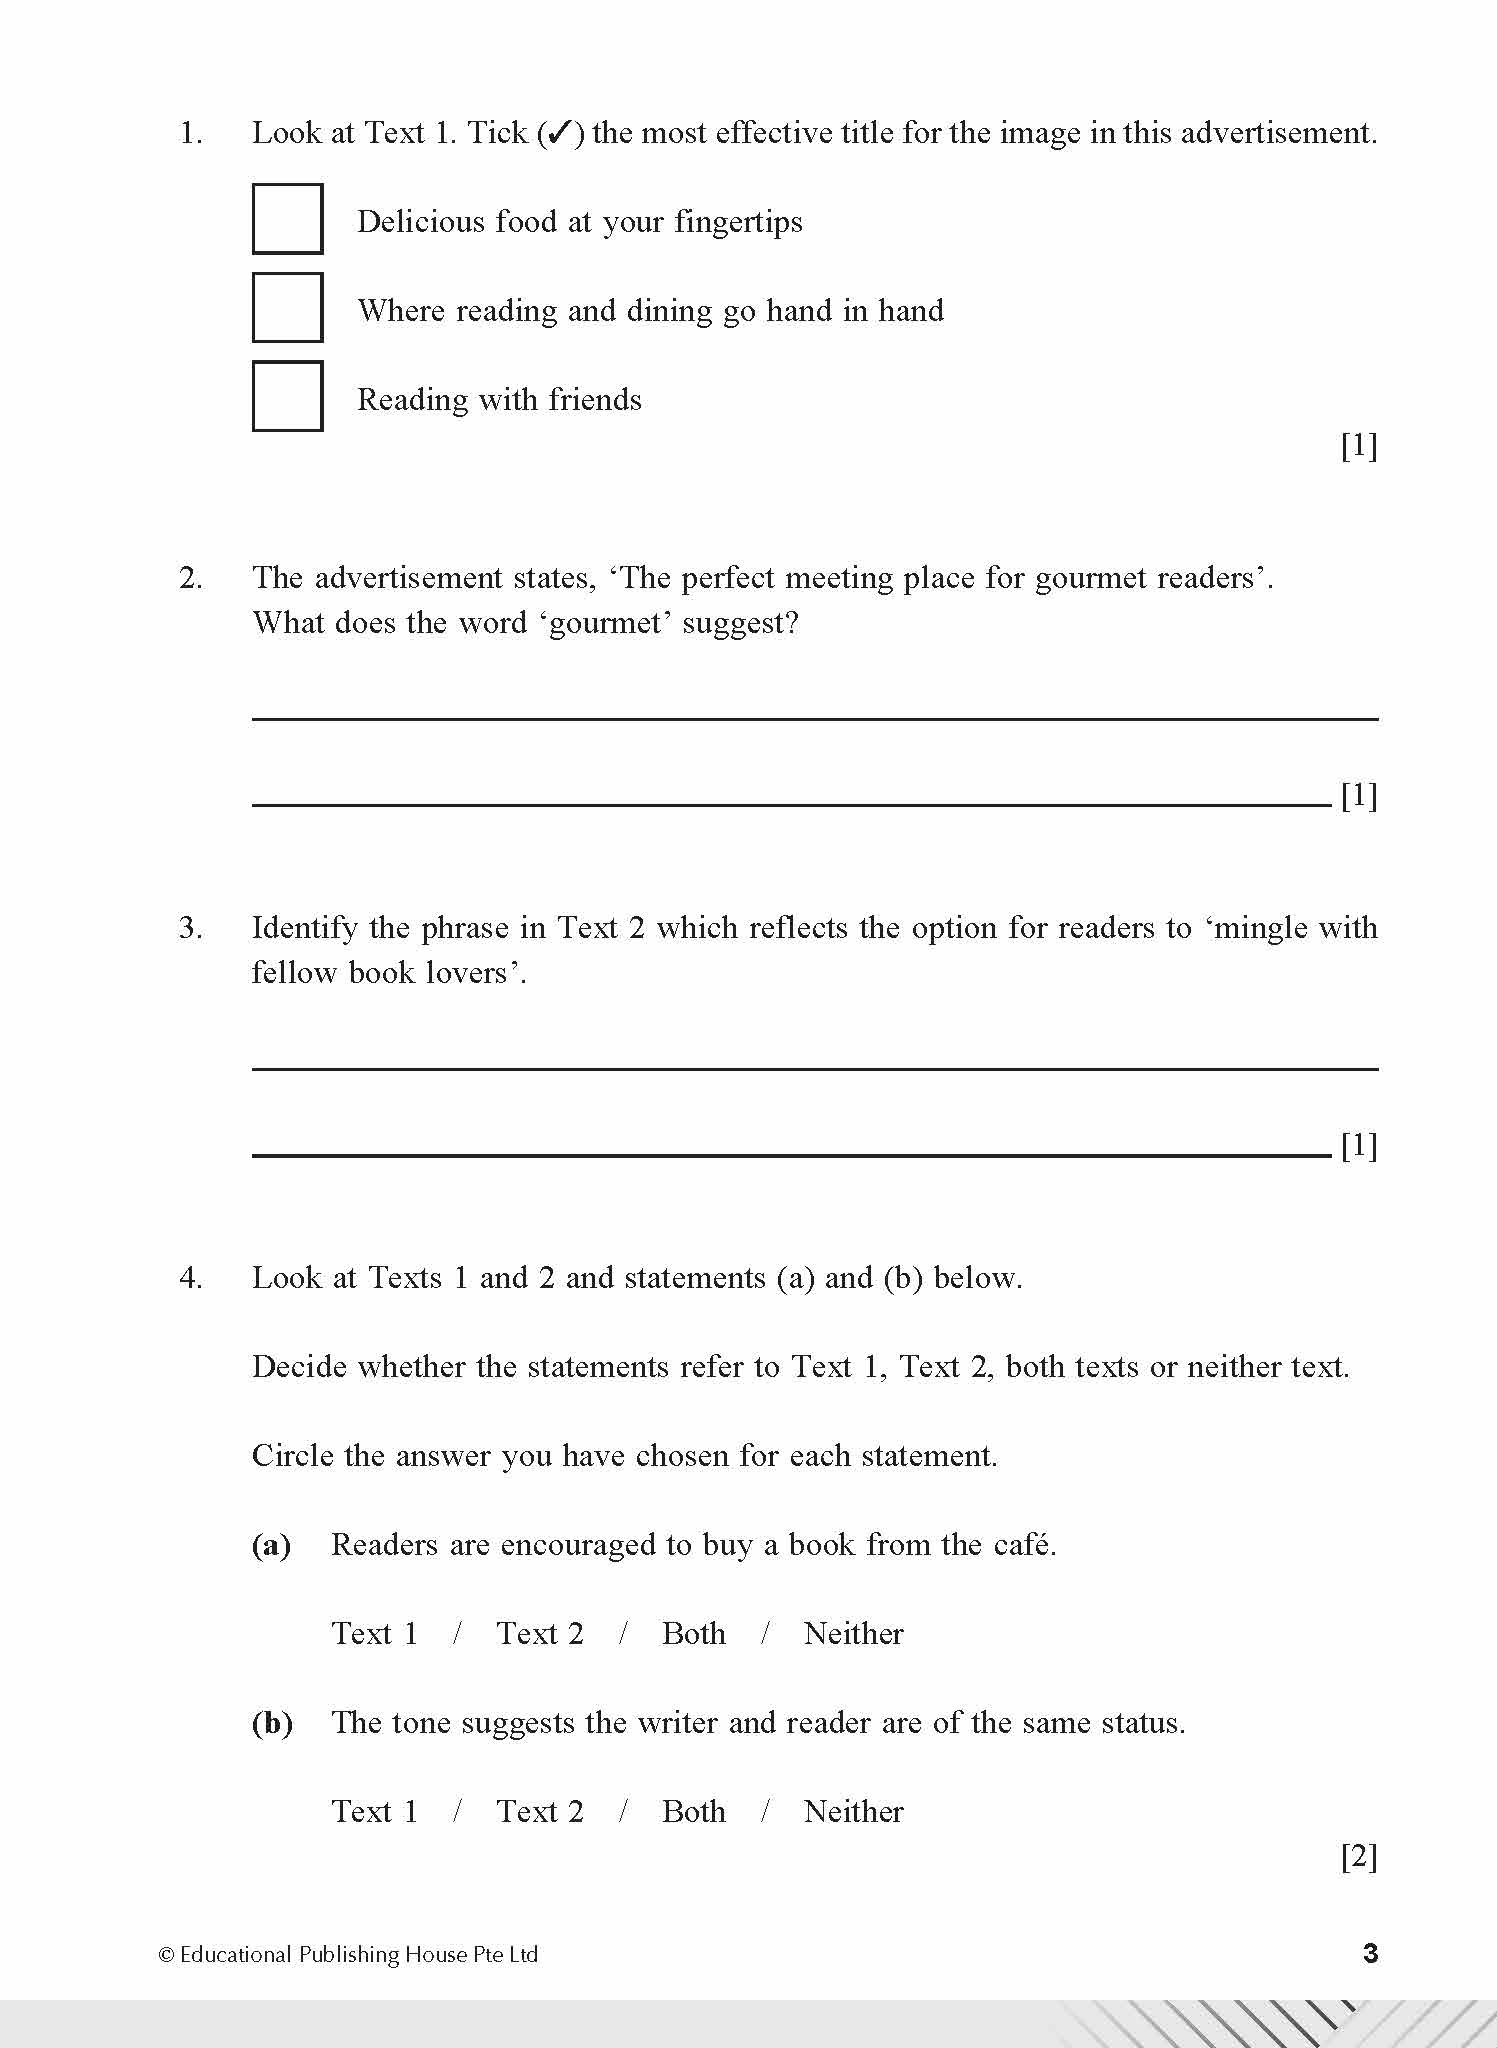 Secondary 3 (G3) English Examination Practice